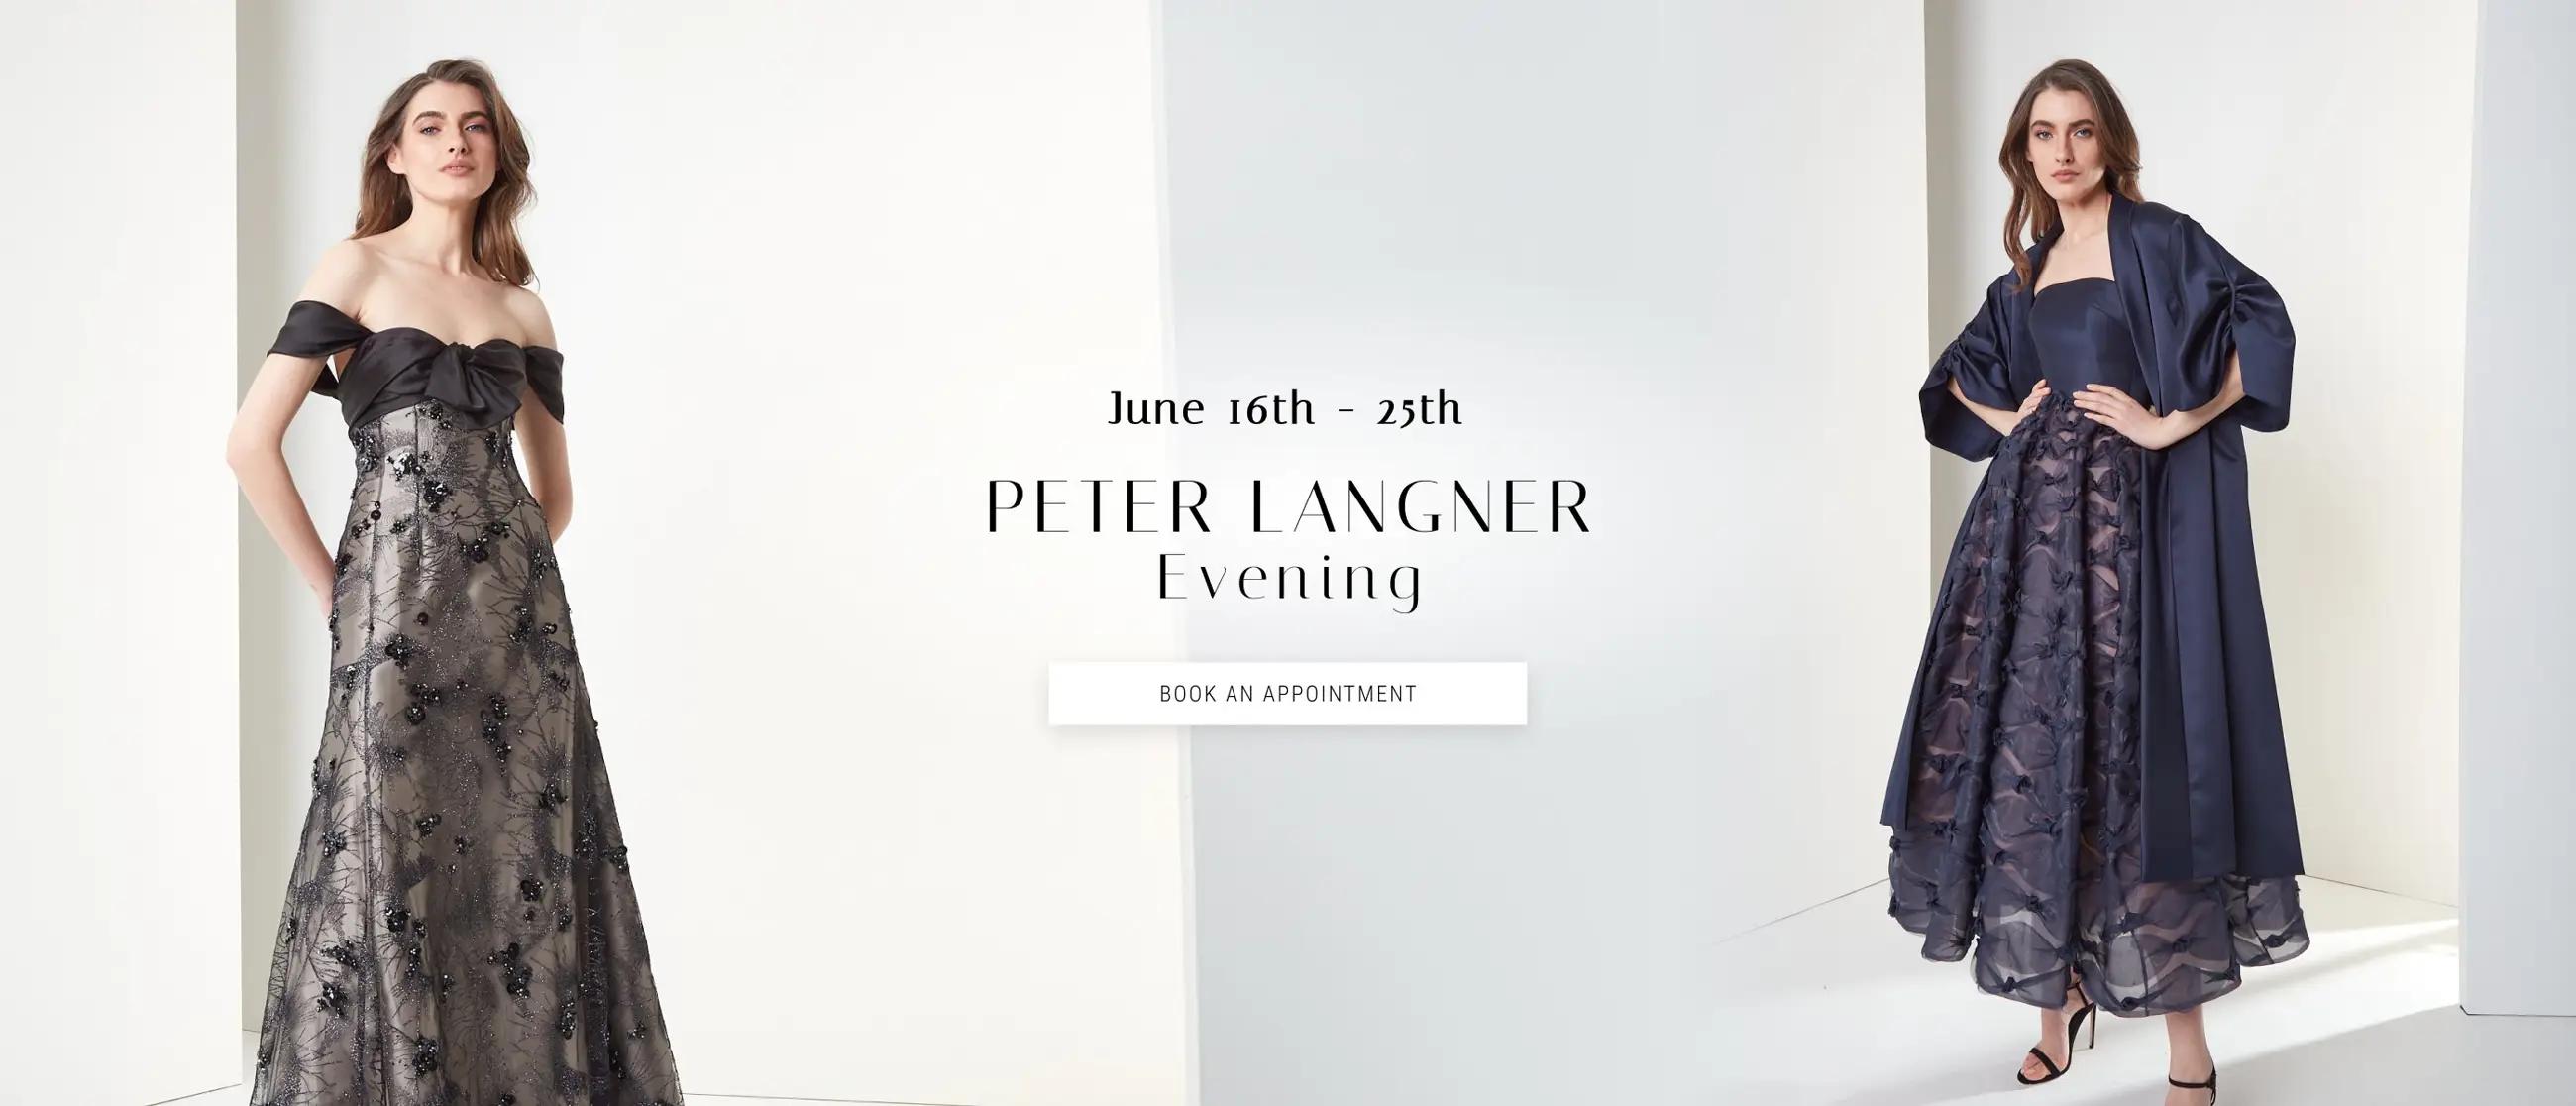 Peter Langner Evening banner